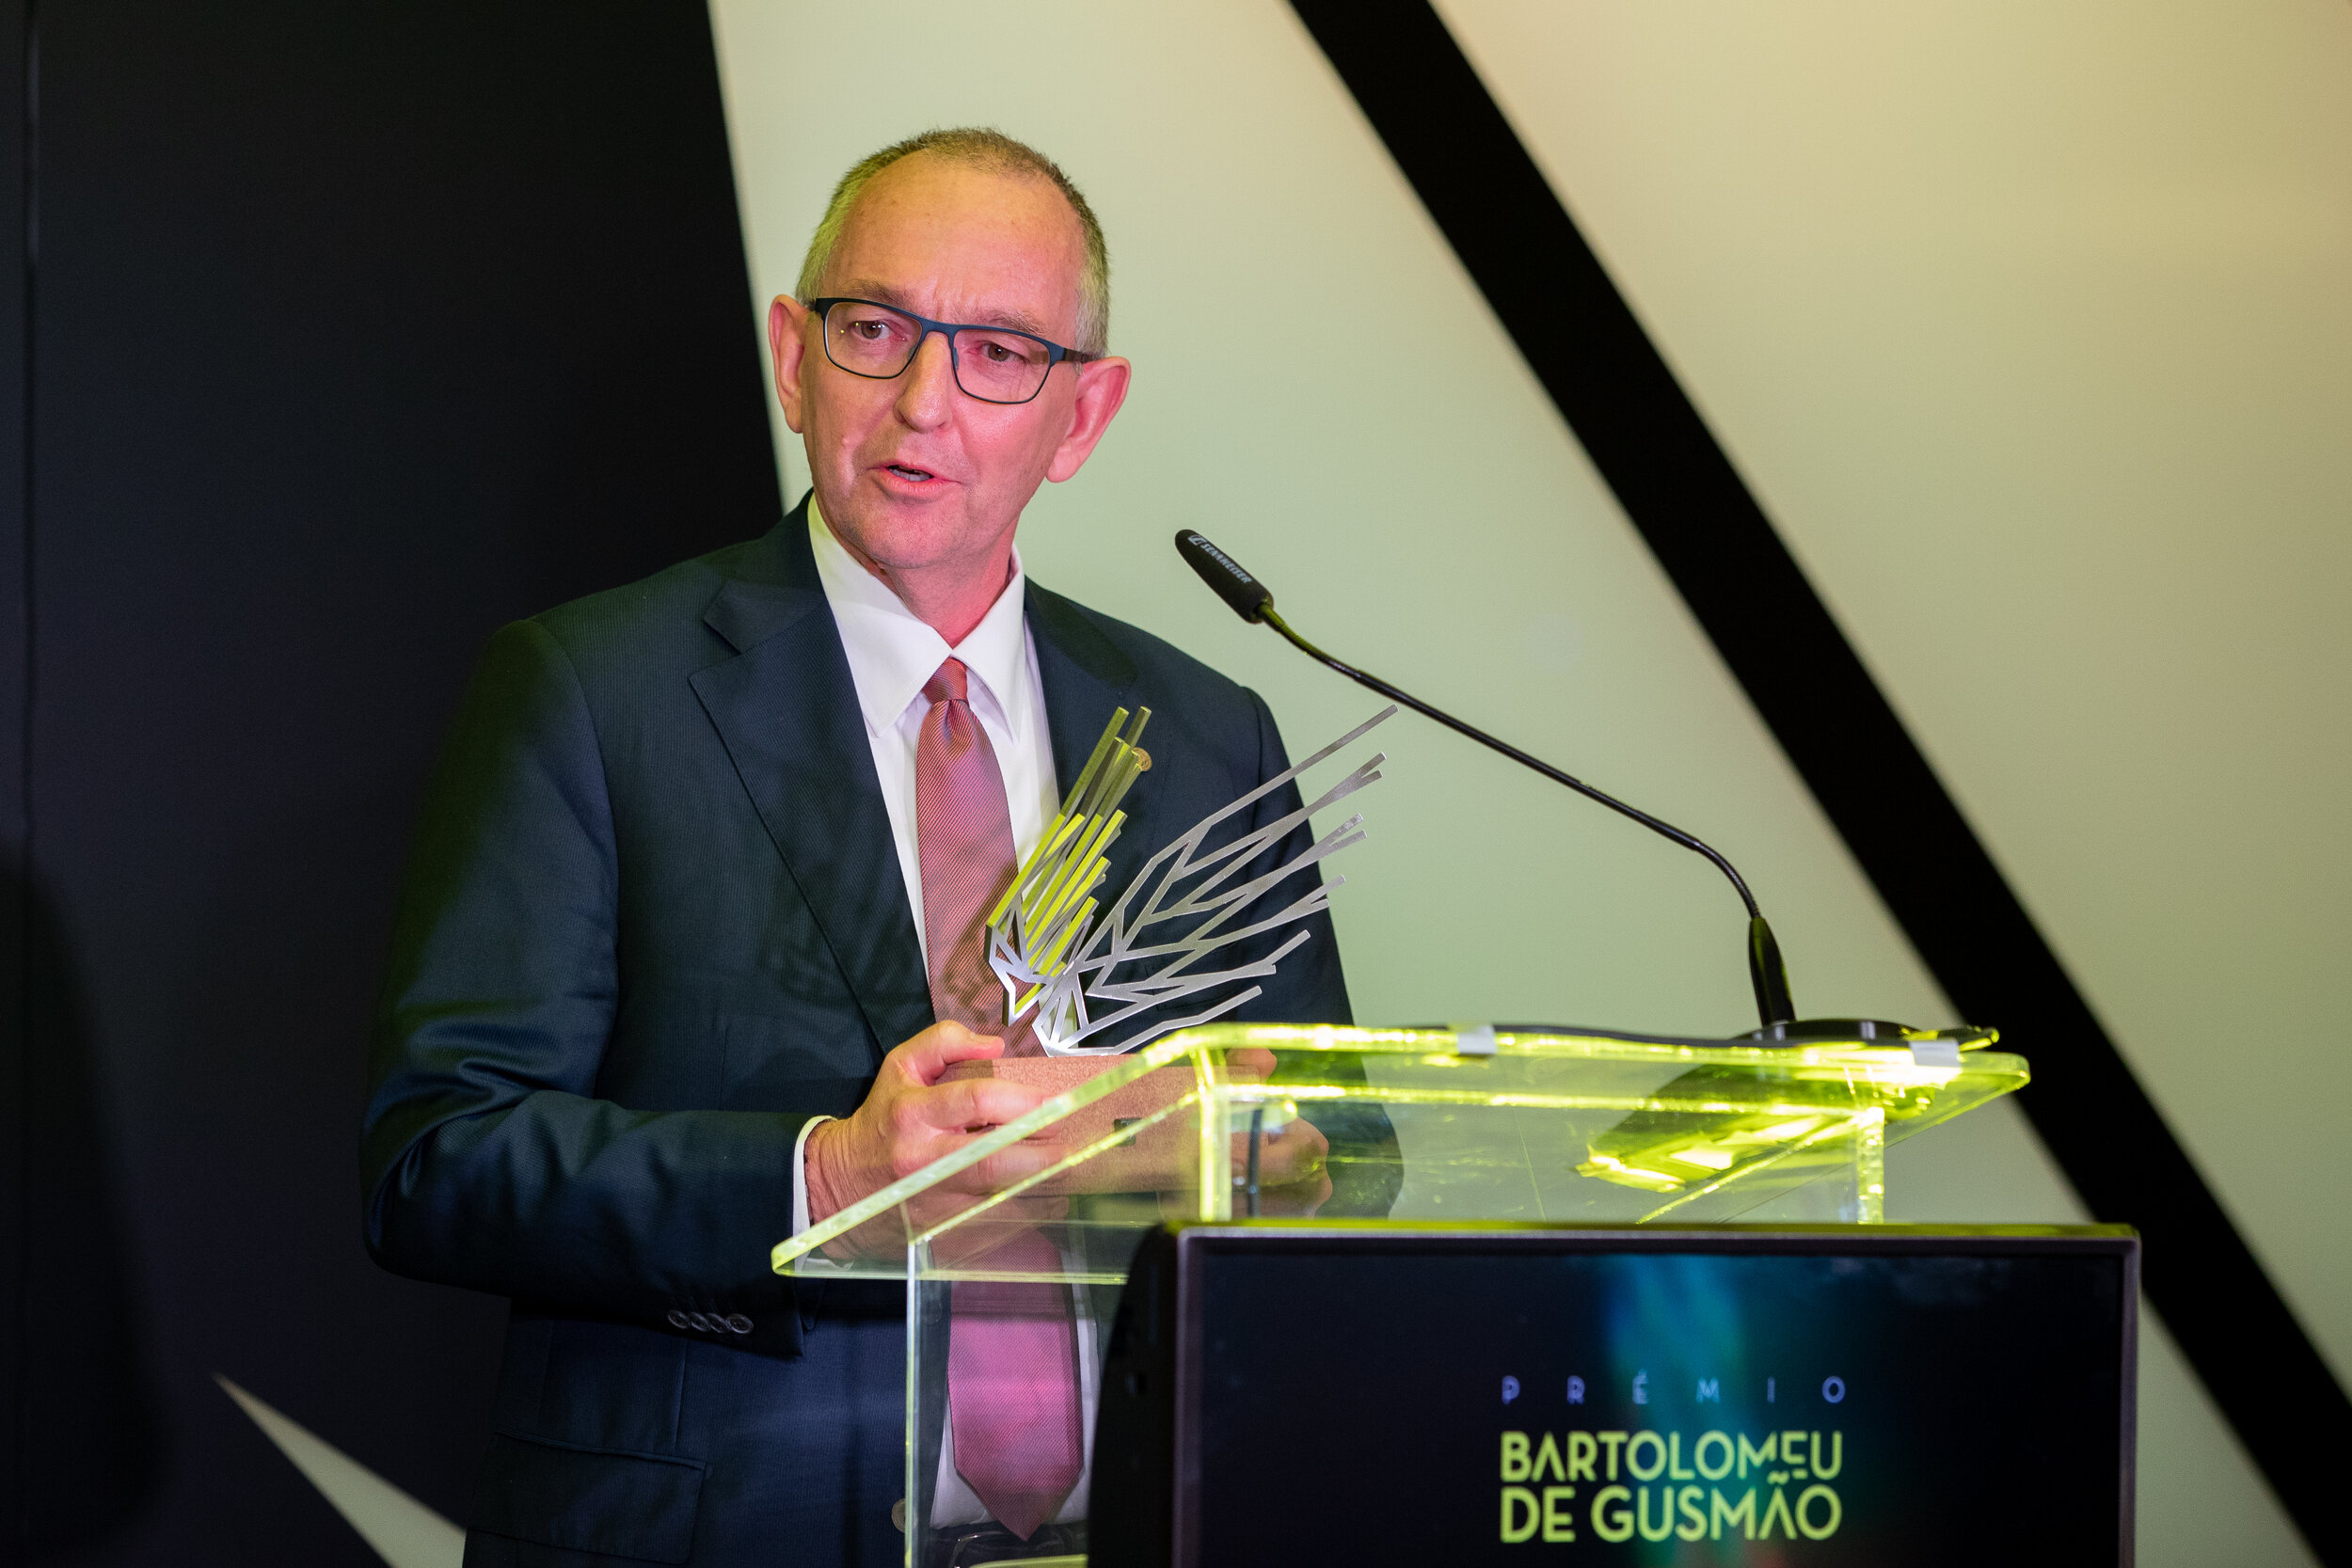 INL wins Bartolomeu de Gusmão Award on Intellectual Property